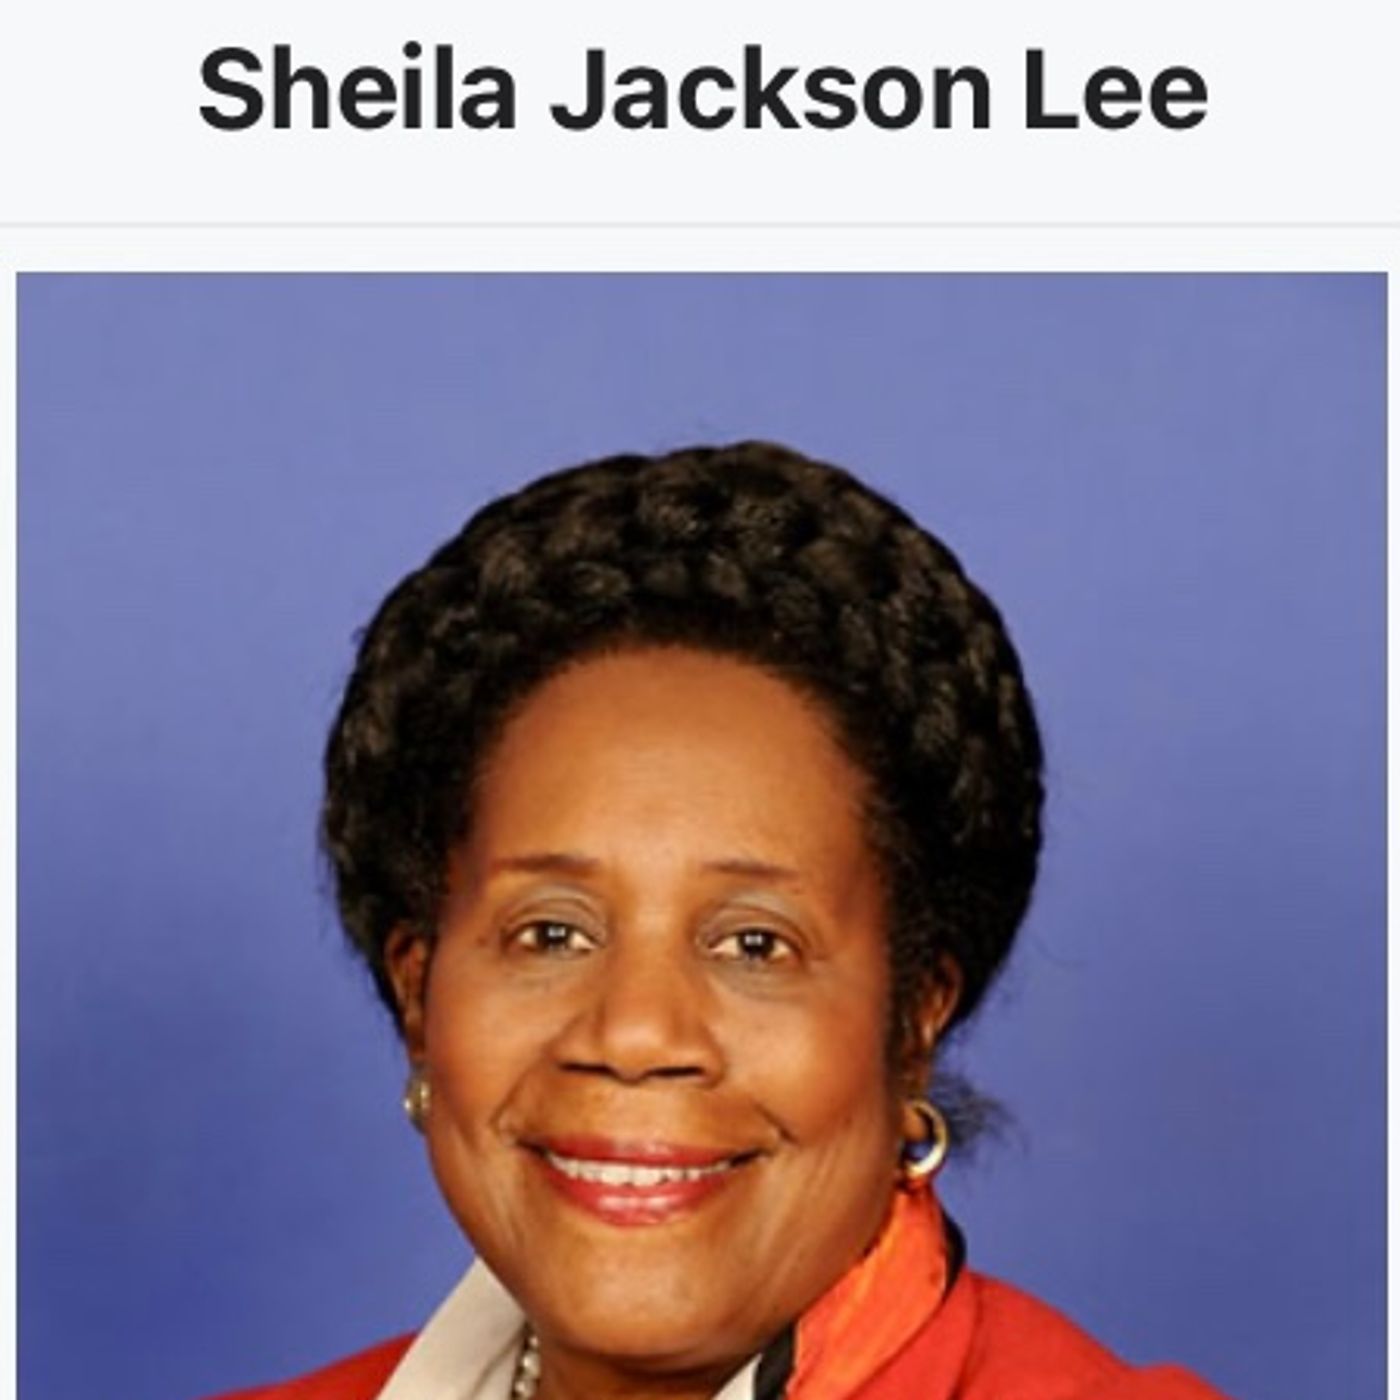 Shelia Jackson Lee cussed out Staff